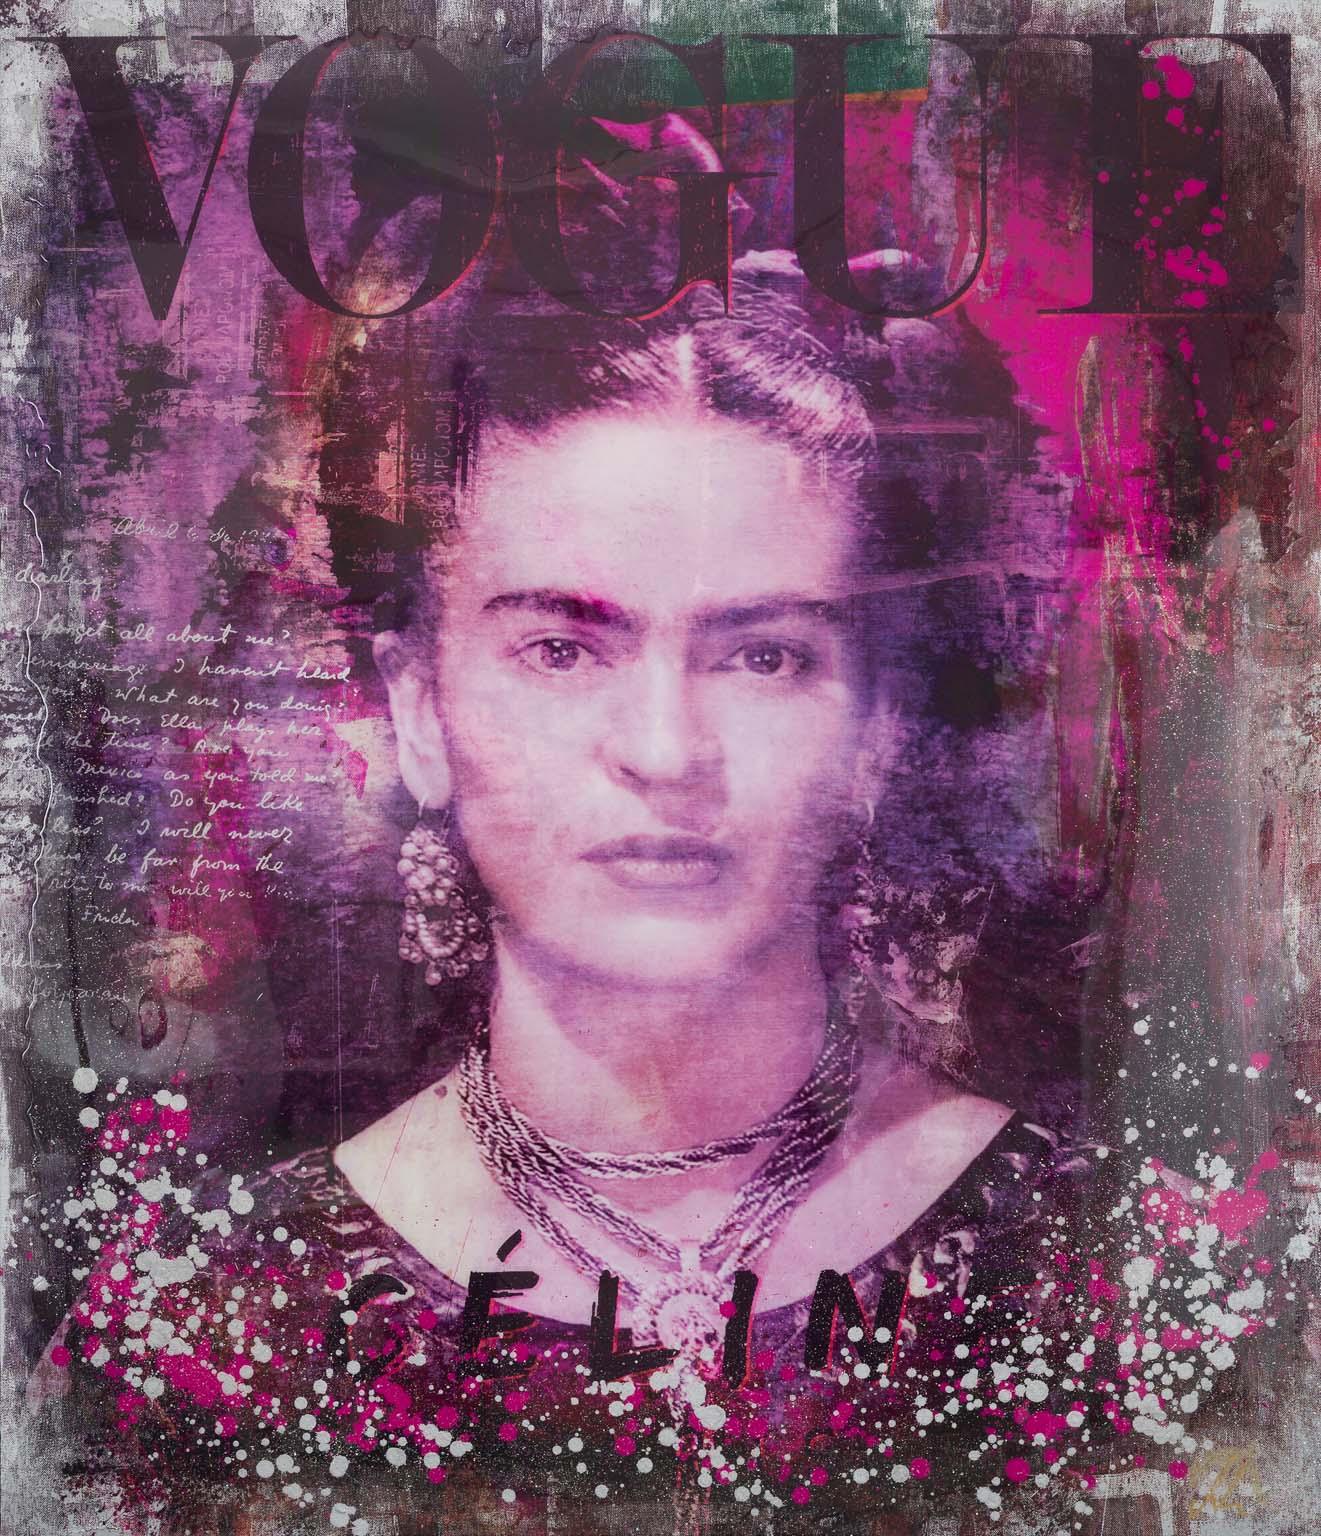 Frida - œuvre d'art contemporaine en techniques mixtes, portrait original de Frida Kahlo - Mixed Media Art de Devin Miles